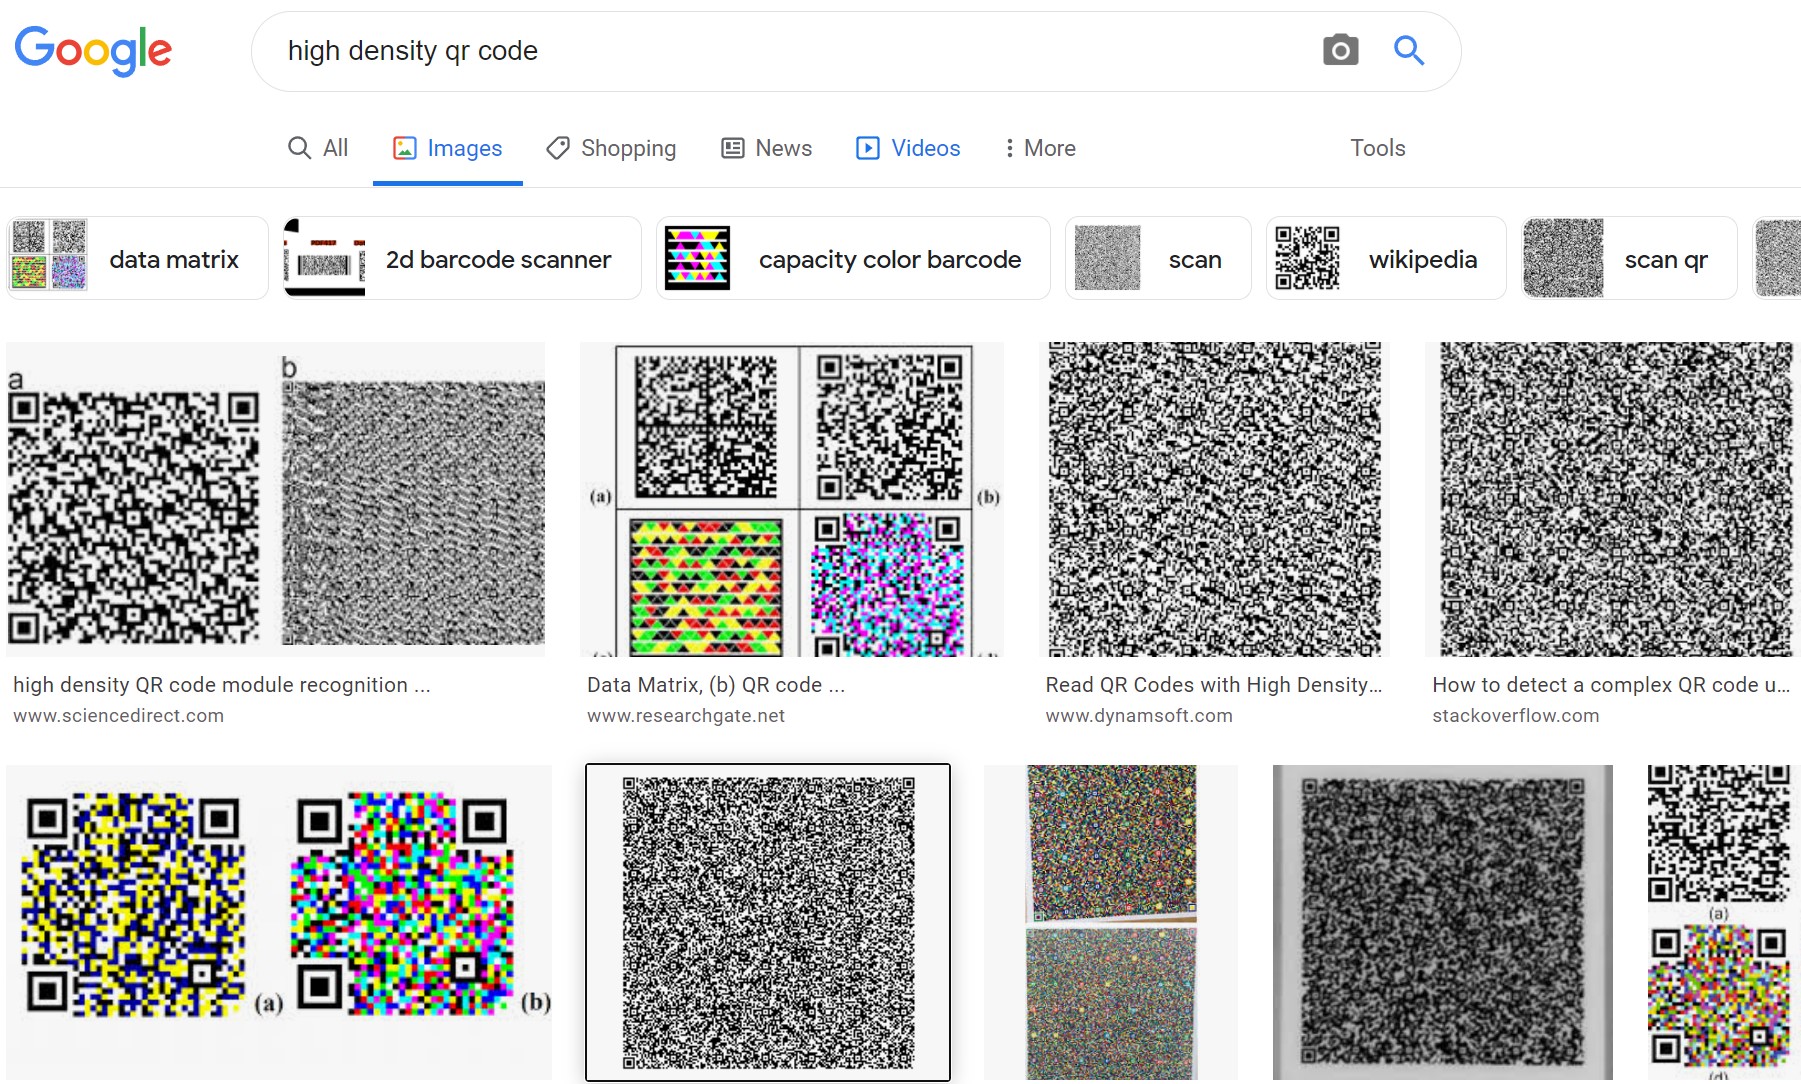 high density QR code from Google